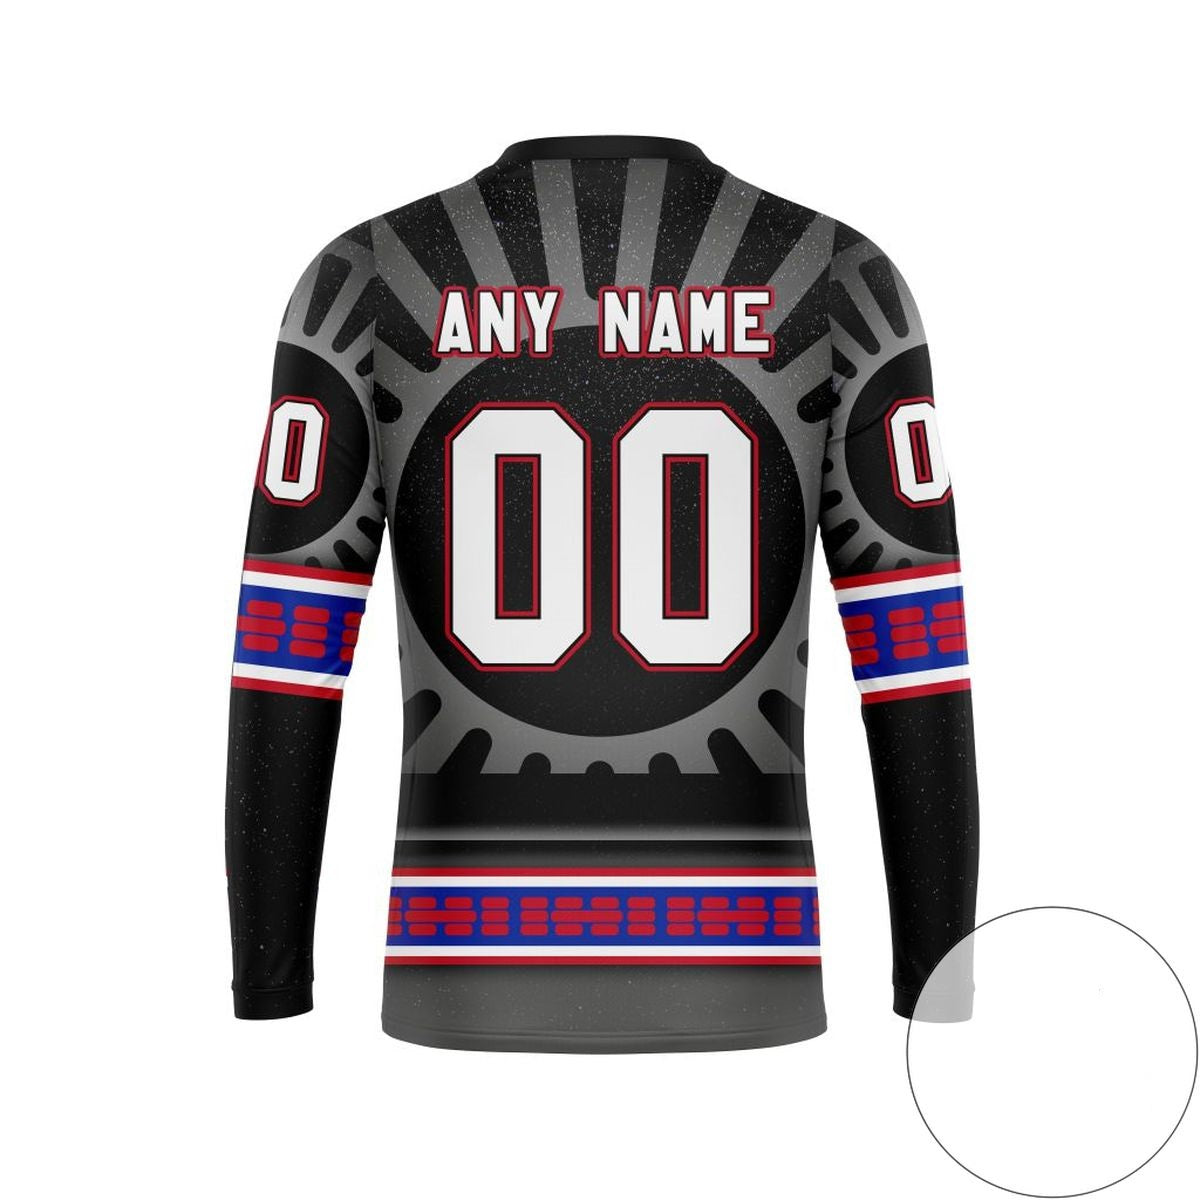 New York Rangers Star Wars Casual Sweatshirt